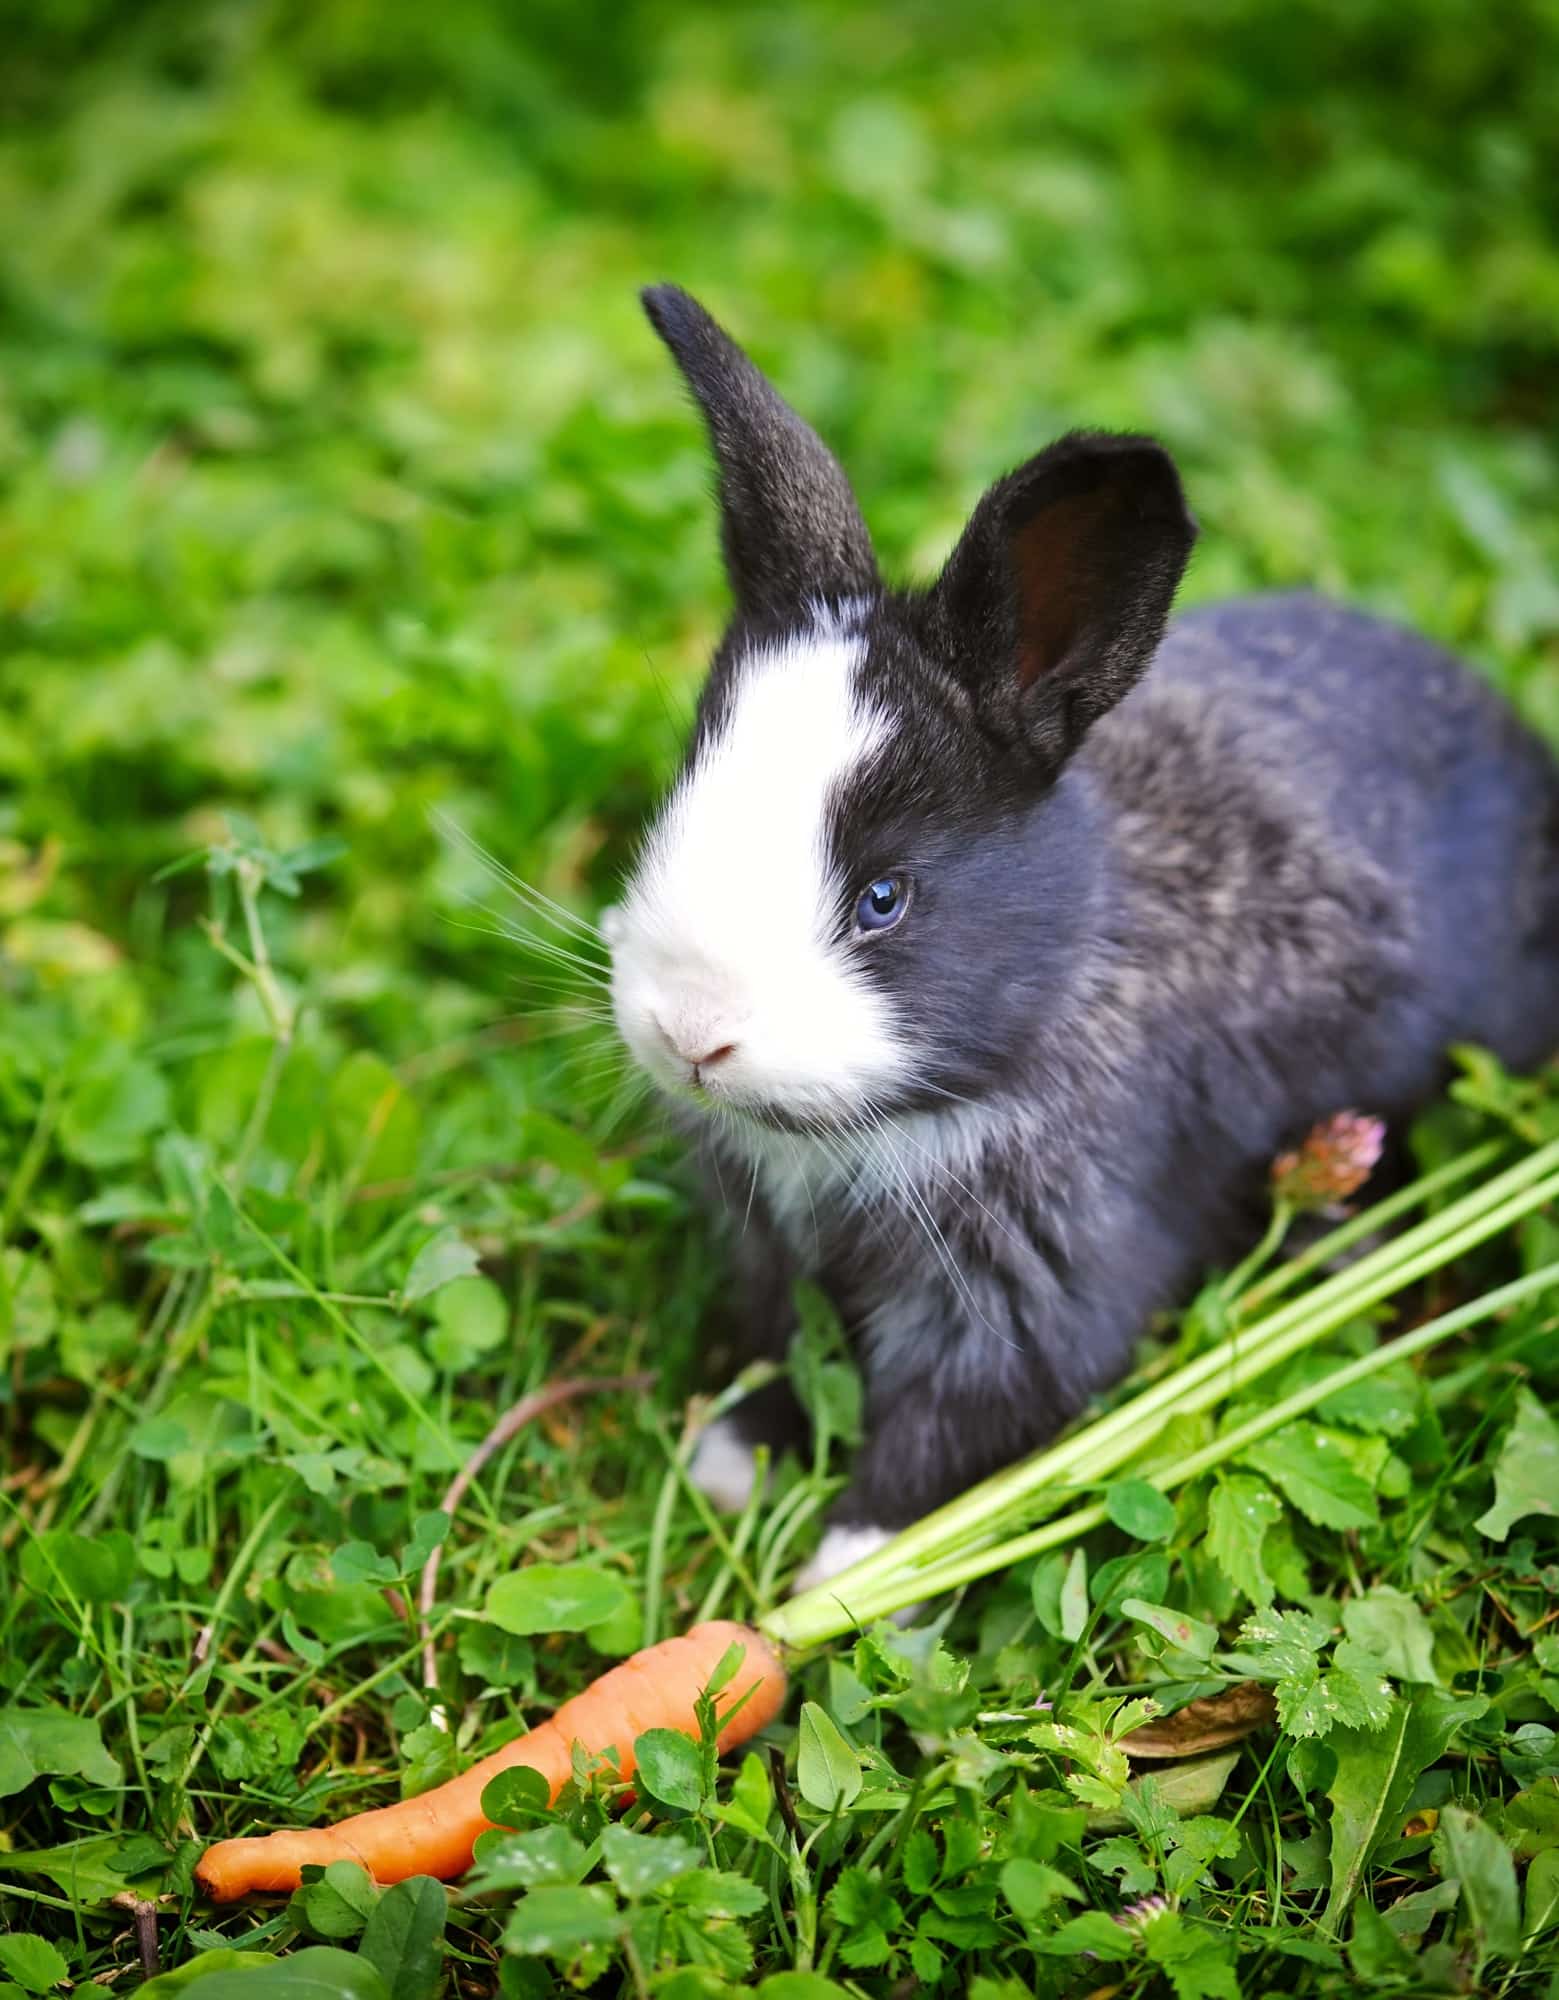 Funny baby rabbit in grass